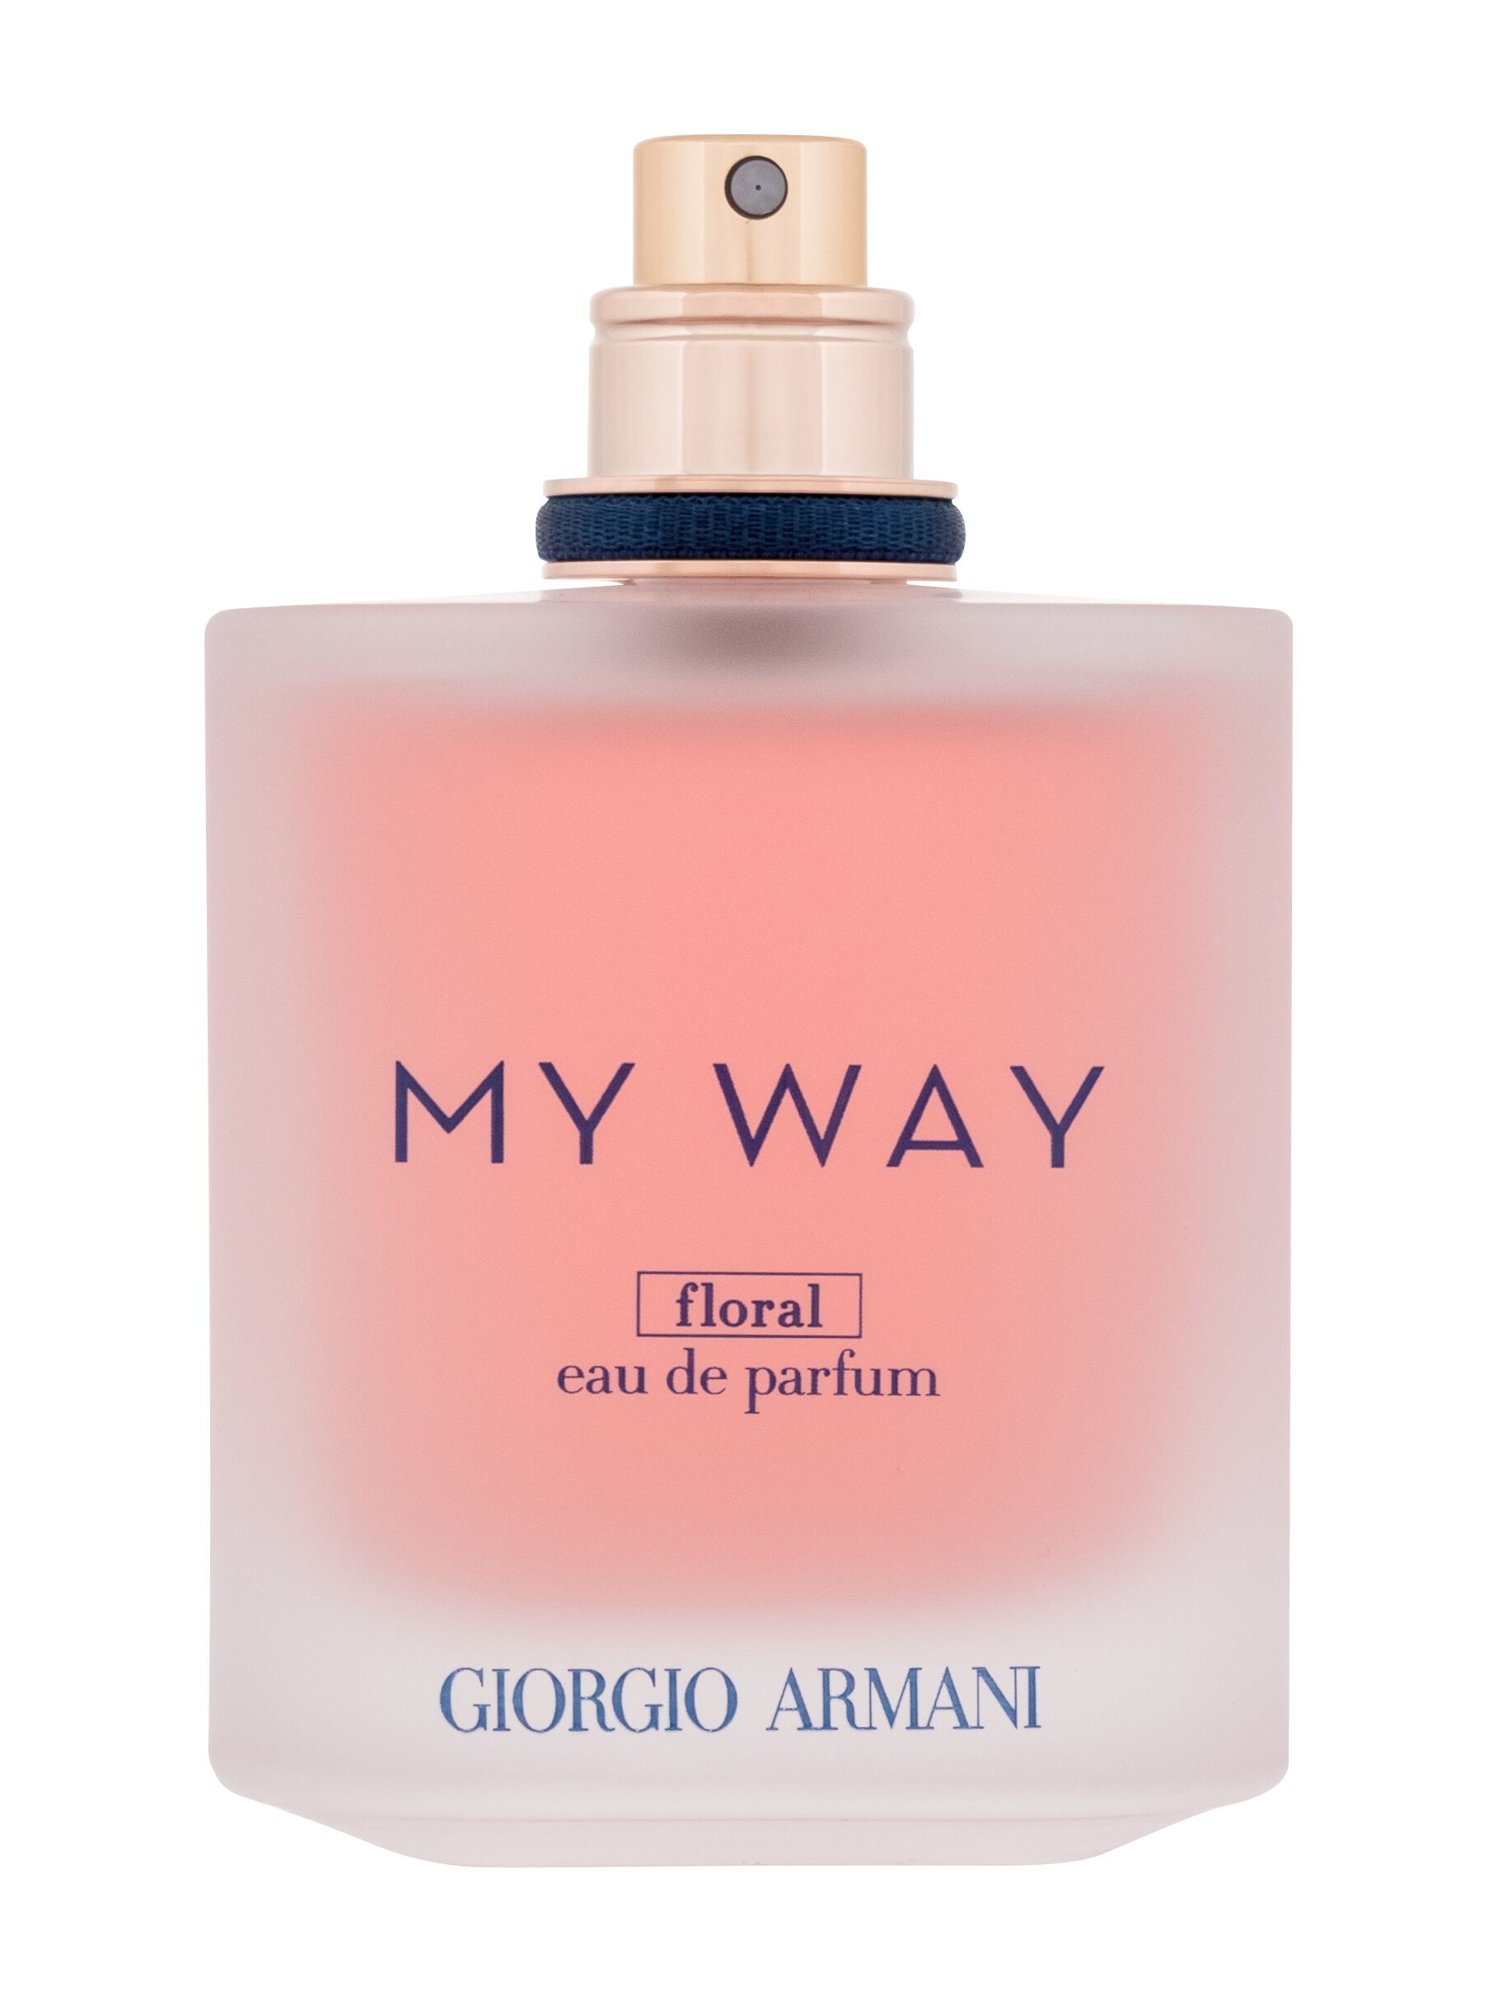 Giorgio Armani My Way Floral, edp 90ml - Teszter